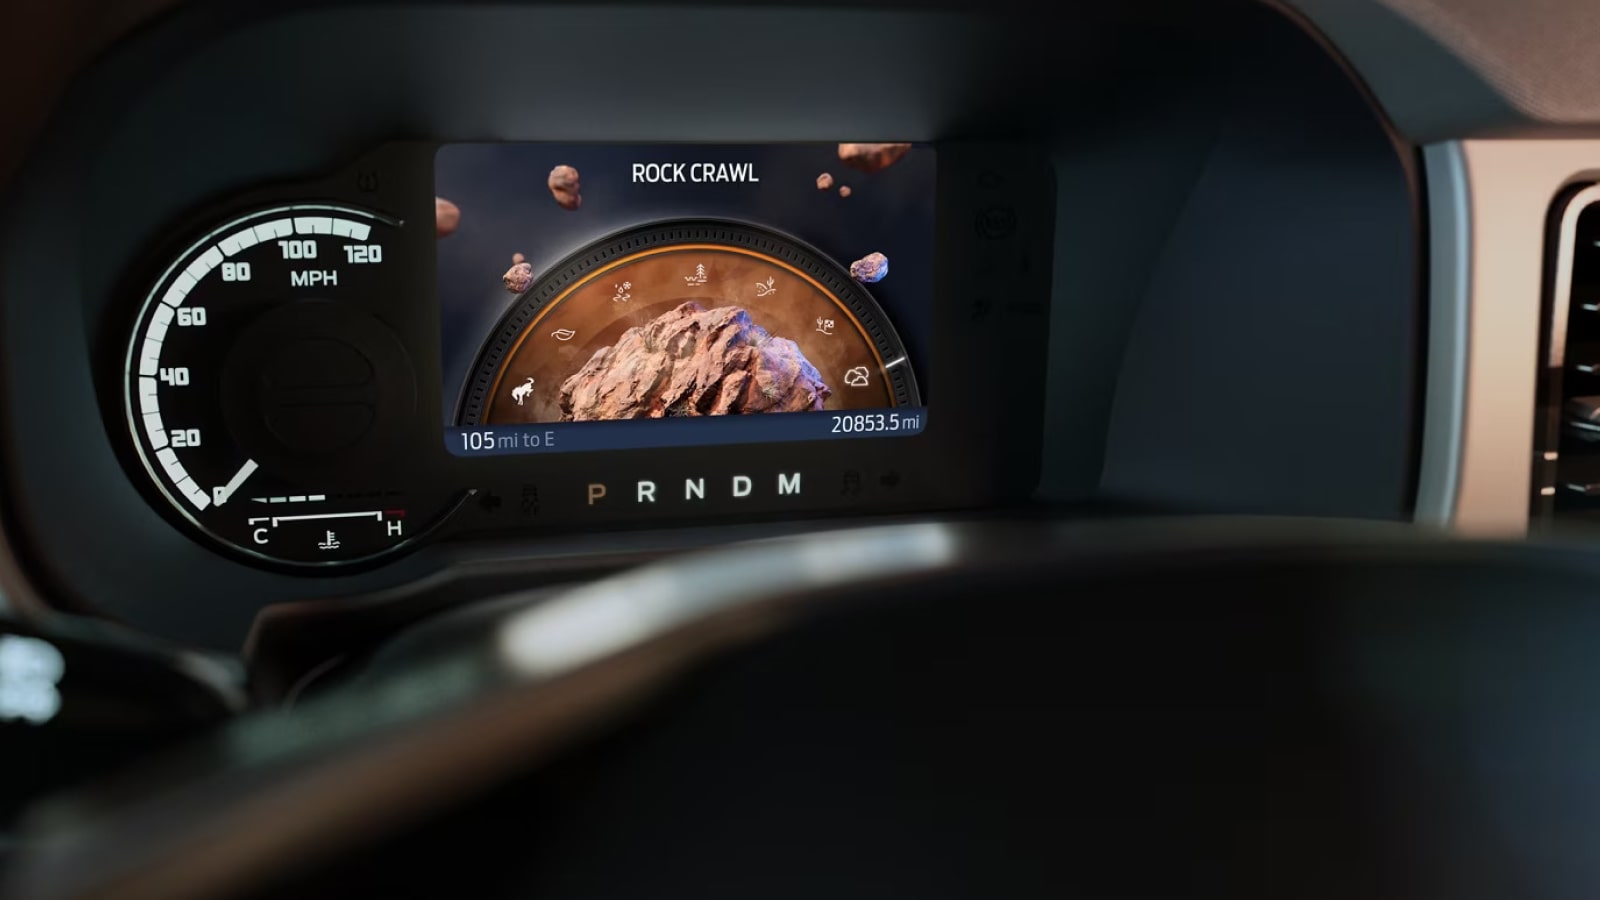 Ford Bronco interface in situ showing rock crawl interface